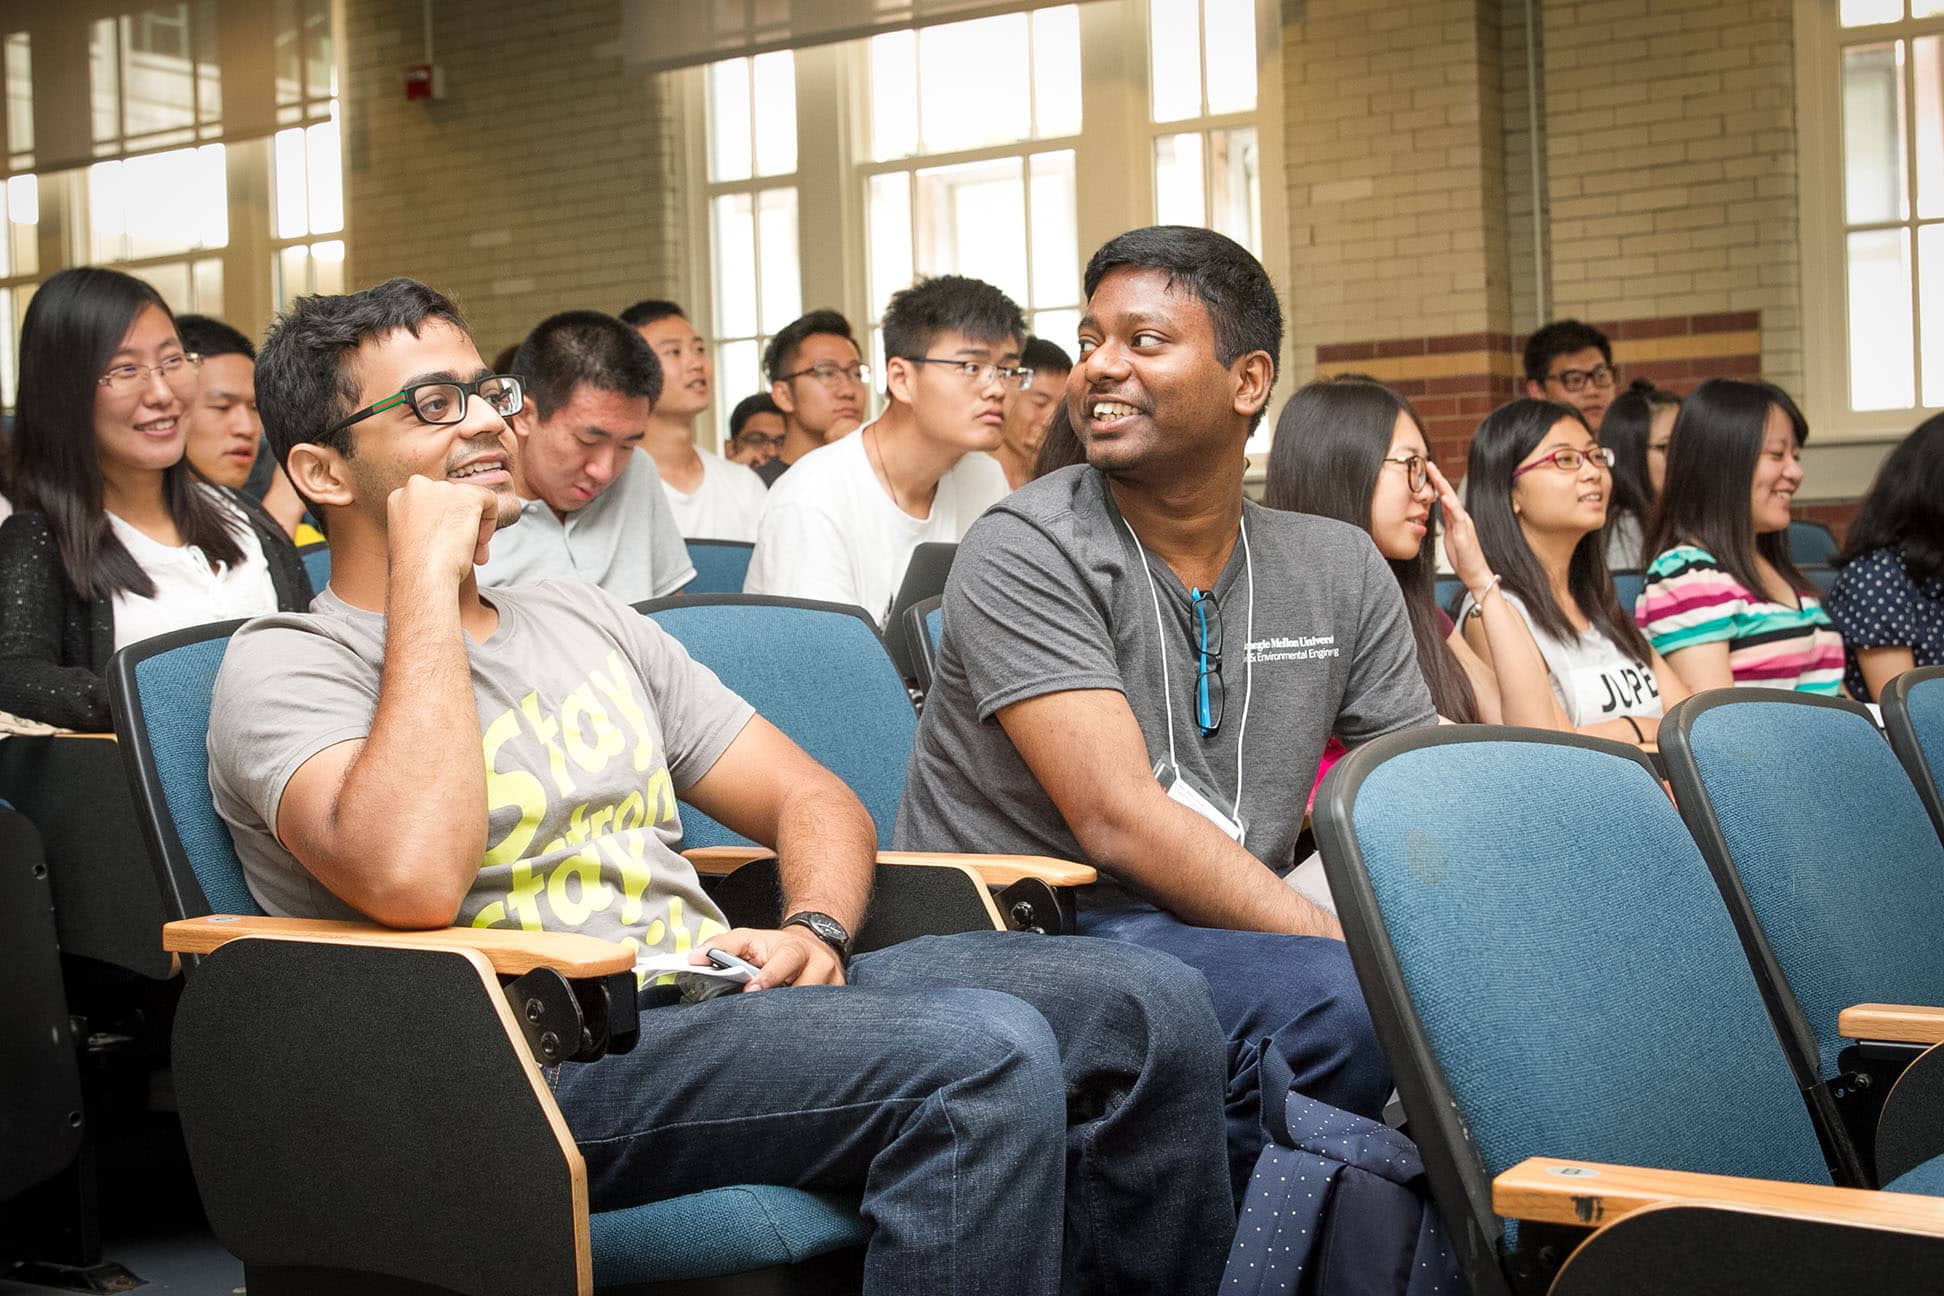 Carnegie Mellon University: Where graduates land high-demand careers in AI